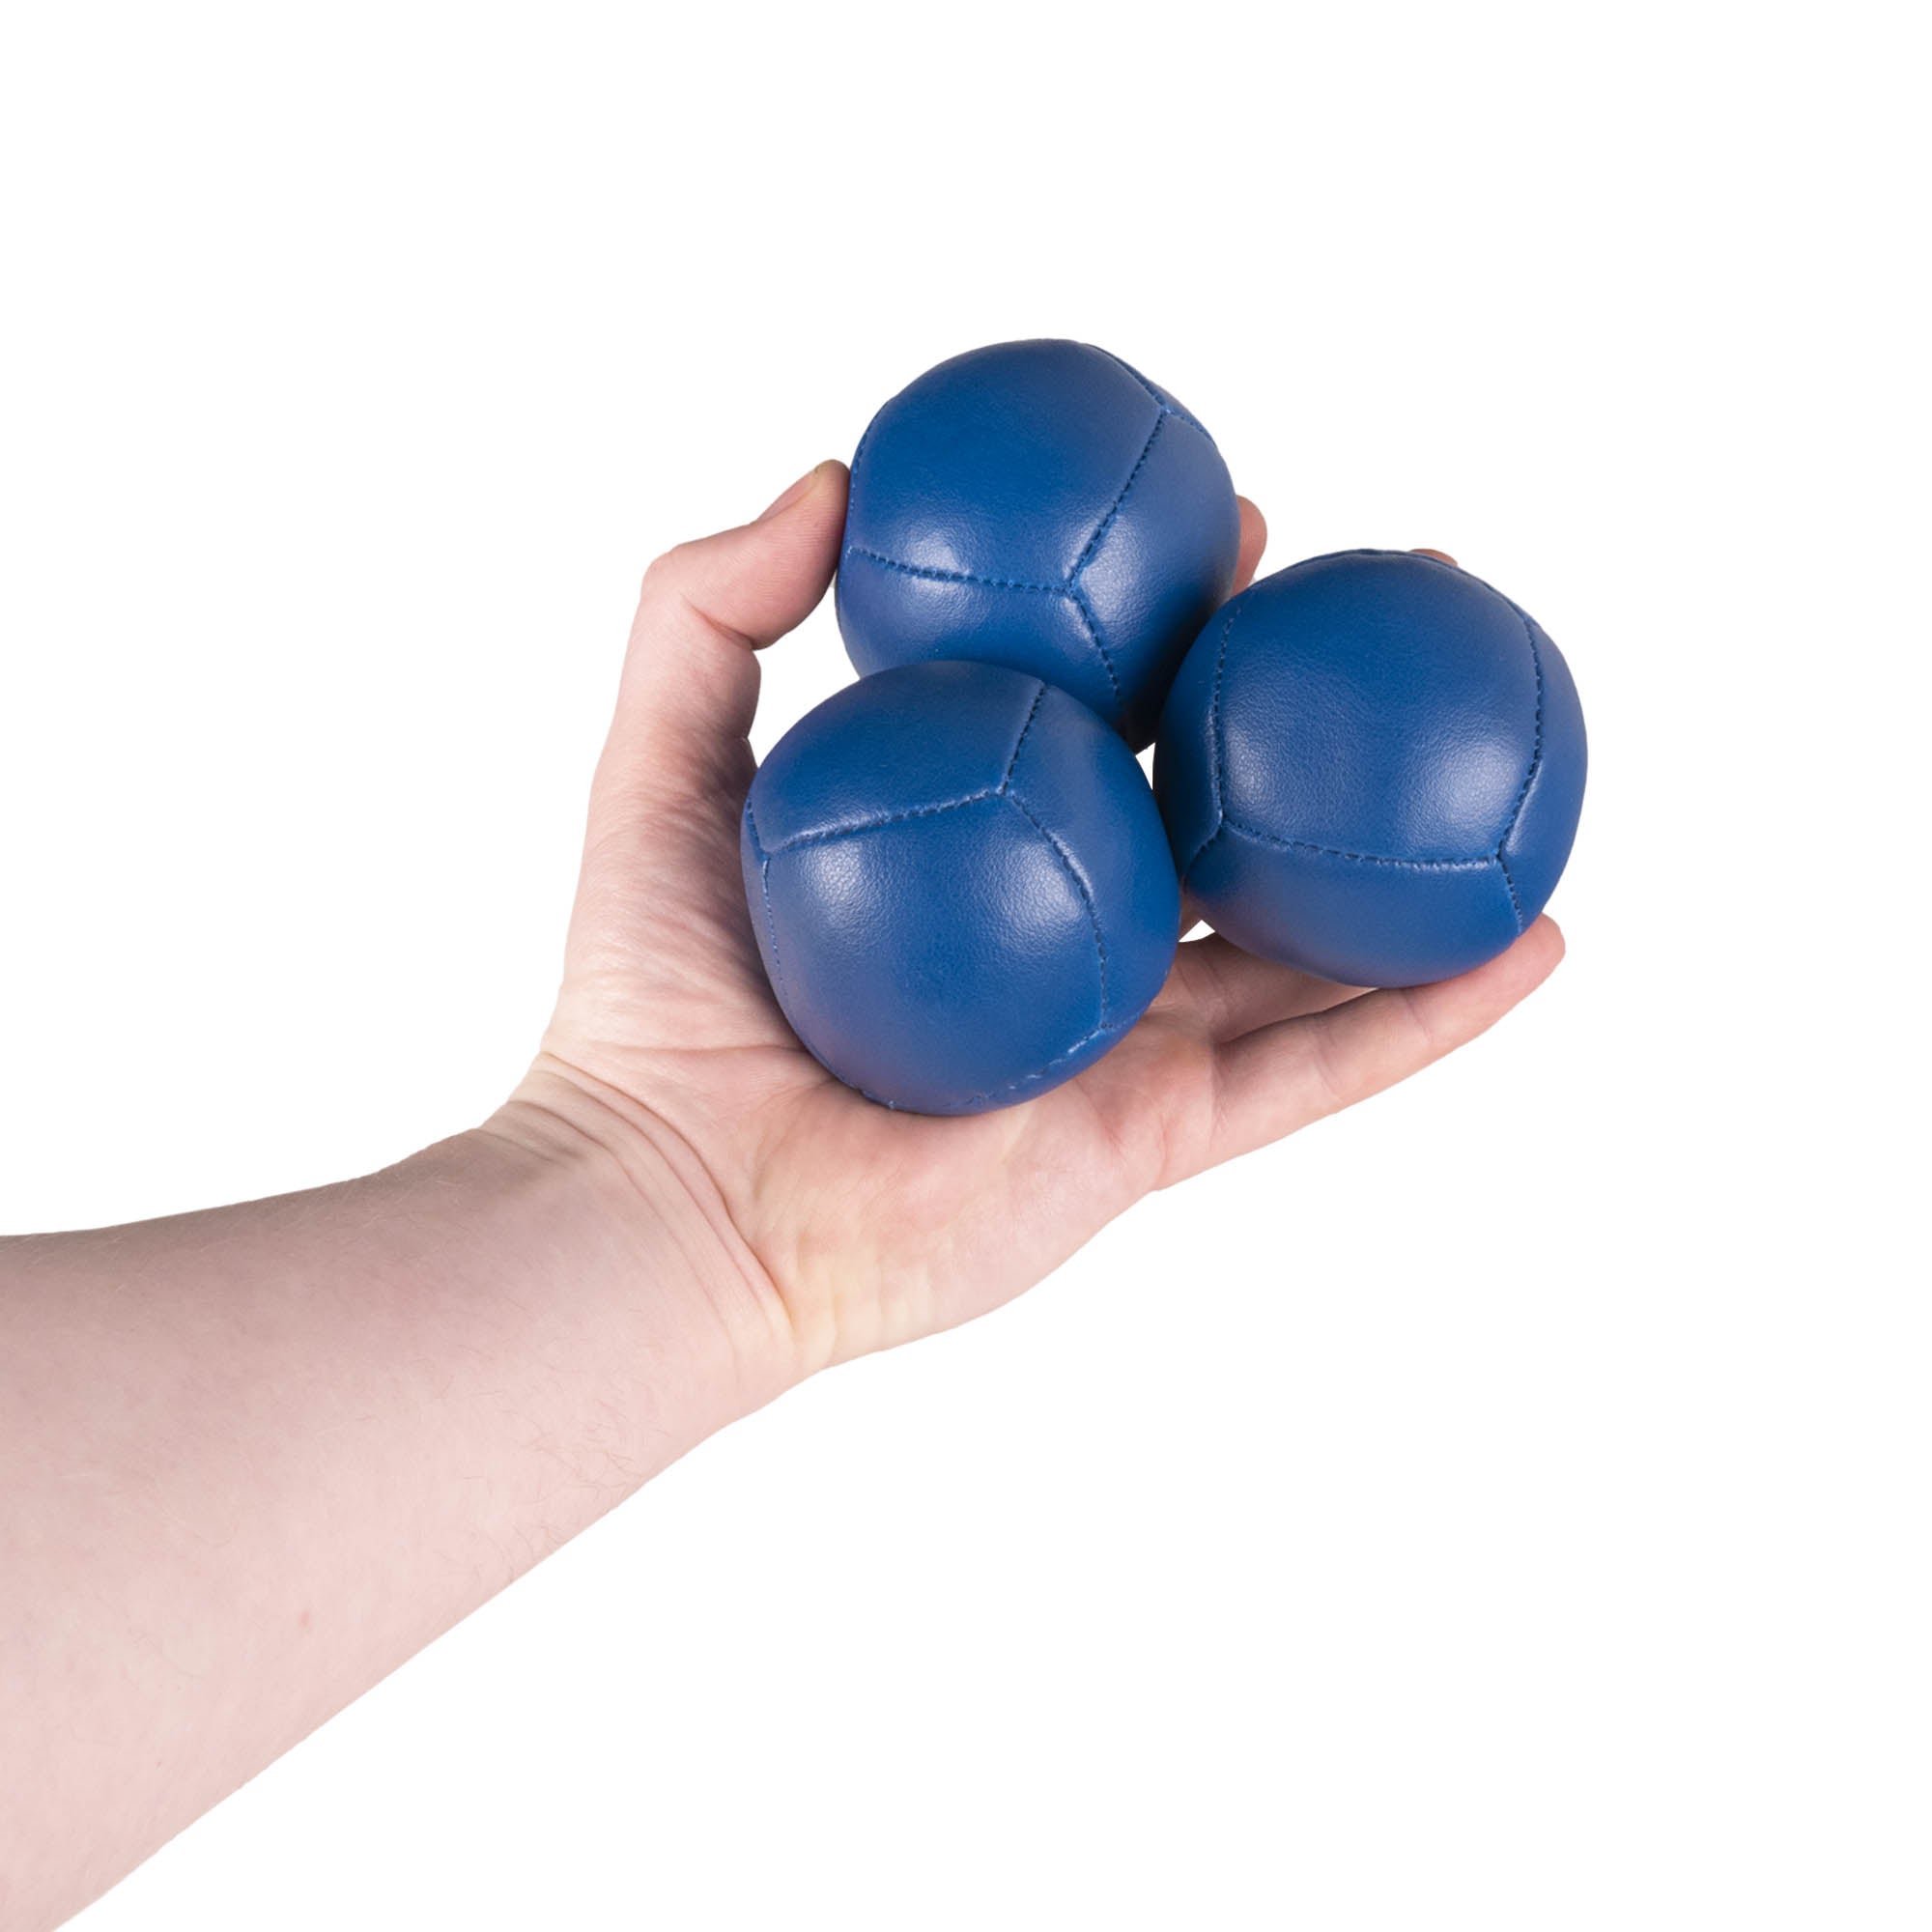 Firetoys three blue 110g thud juggling balls in hand